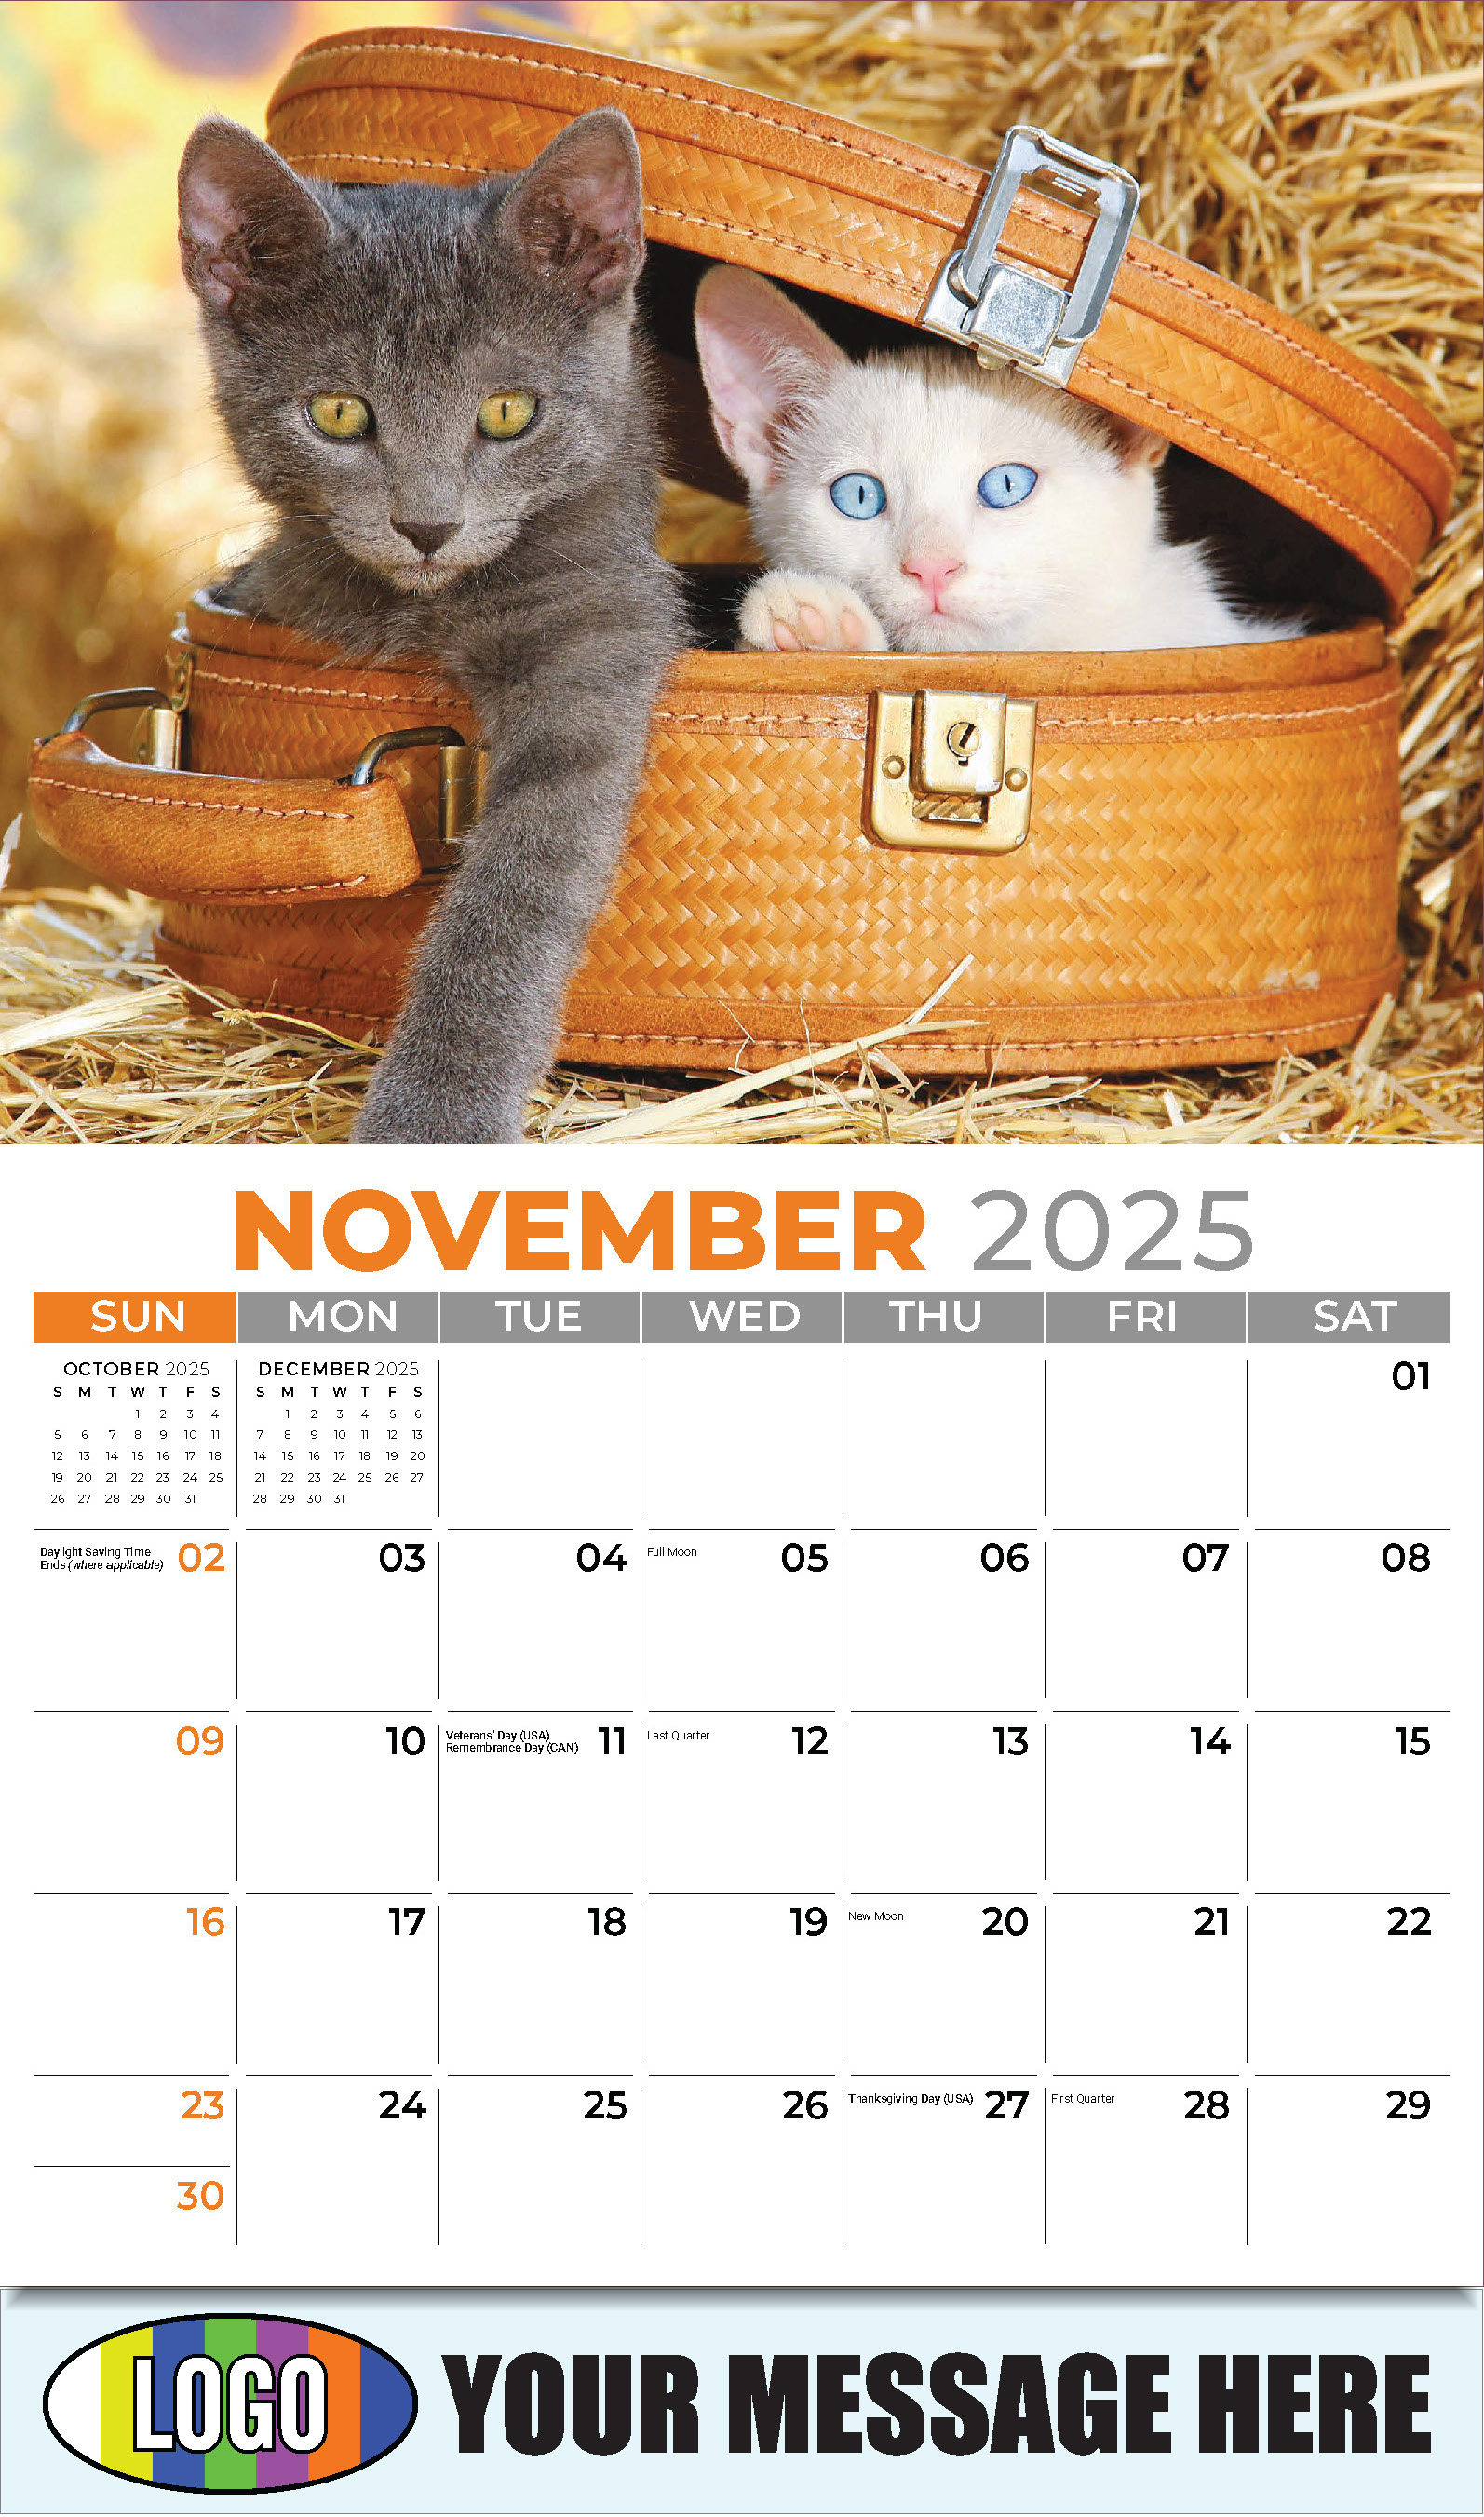 Kittens 2025 Business Promo Wall Calendar - November